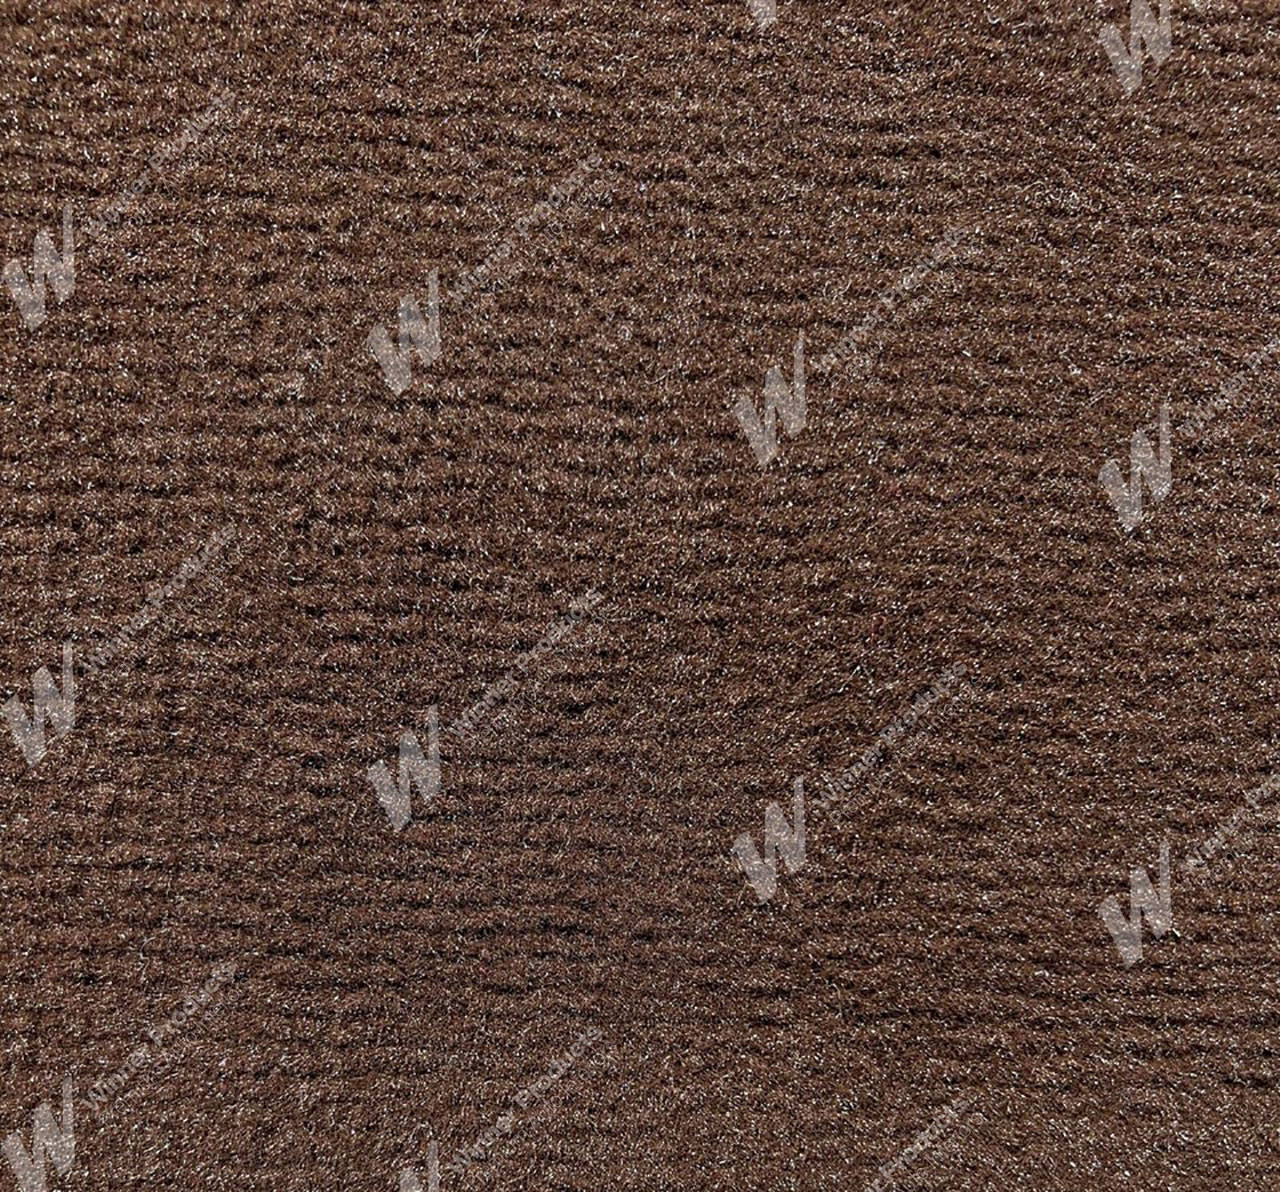 Holden Statesman HQ Statesman Deville 71-72 19M Antique Brown & Diamond Weave Carpet (Image 1 of 1)